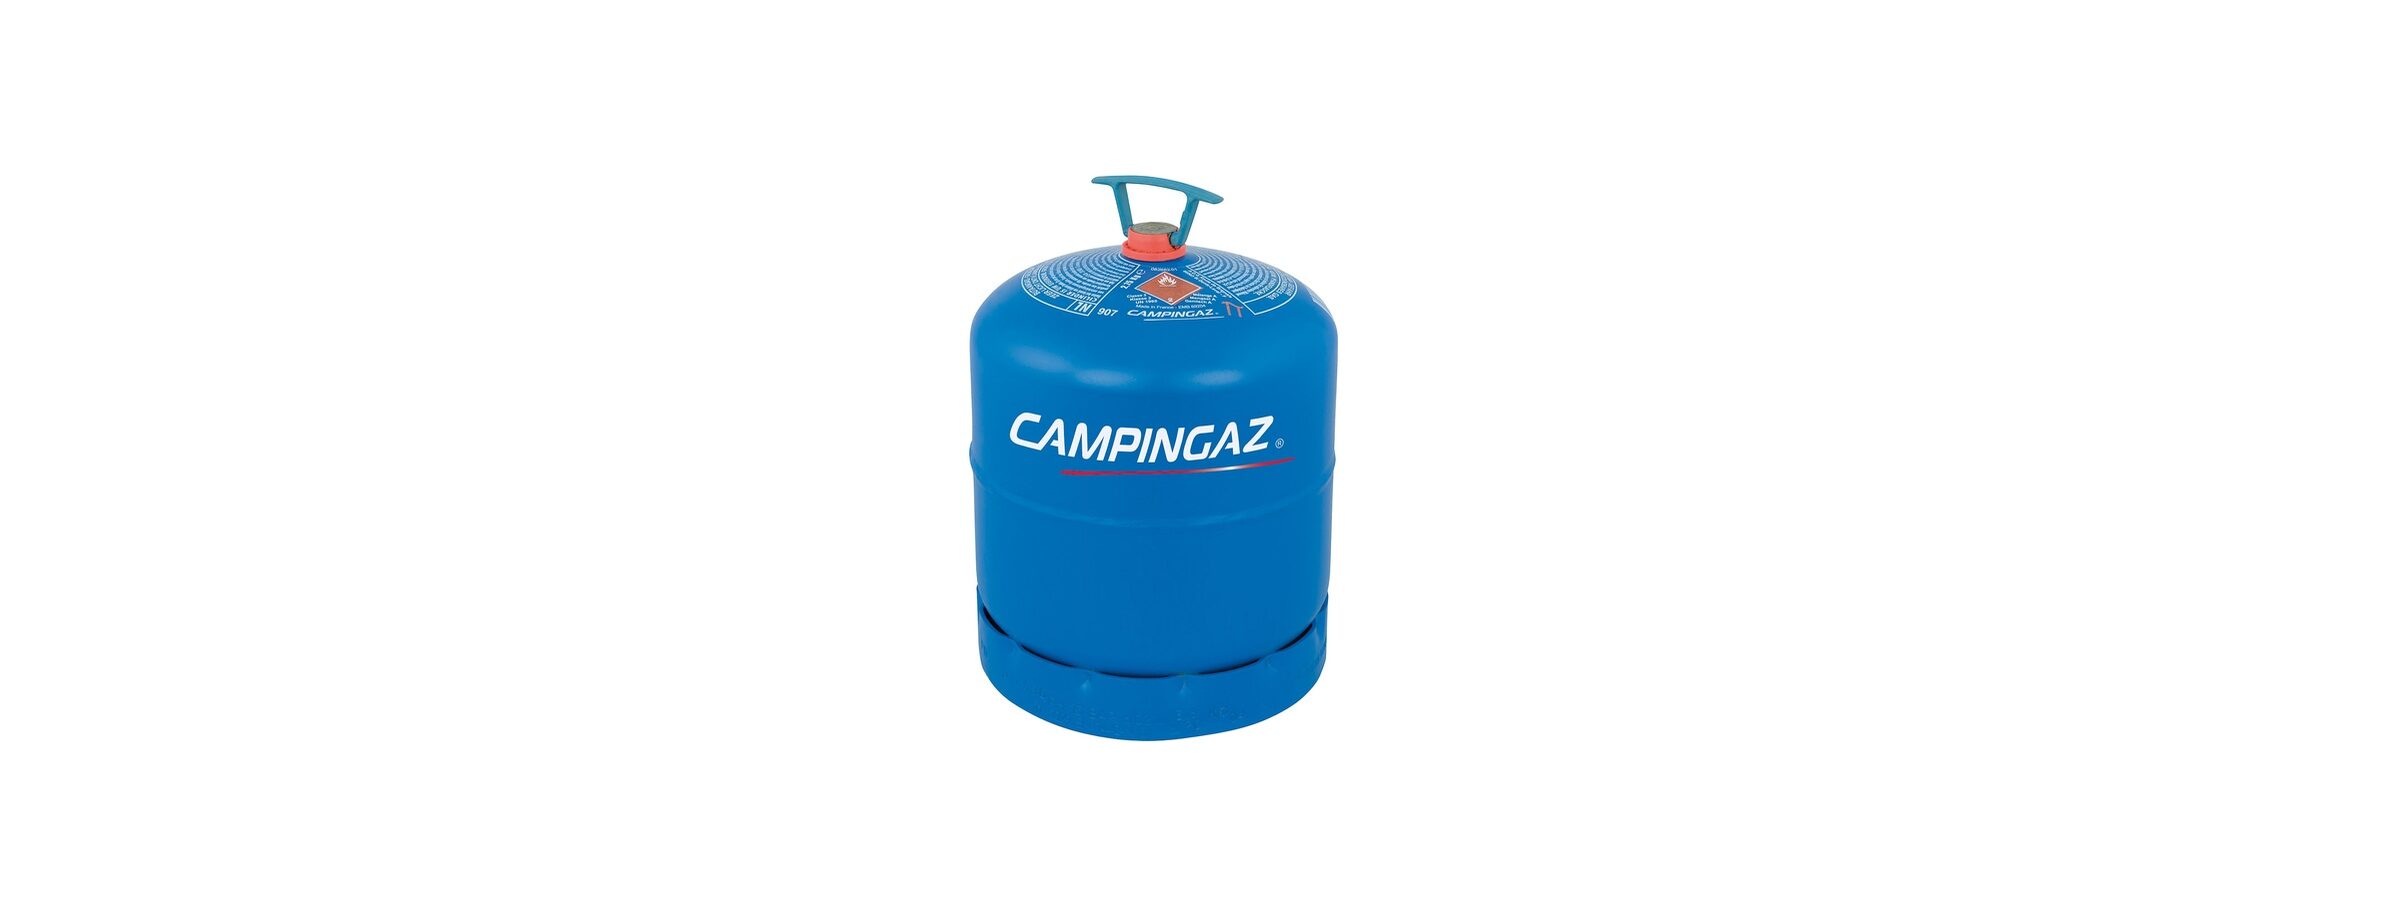 Campingaz 907 Cylinder